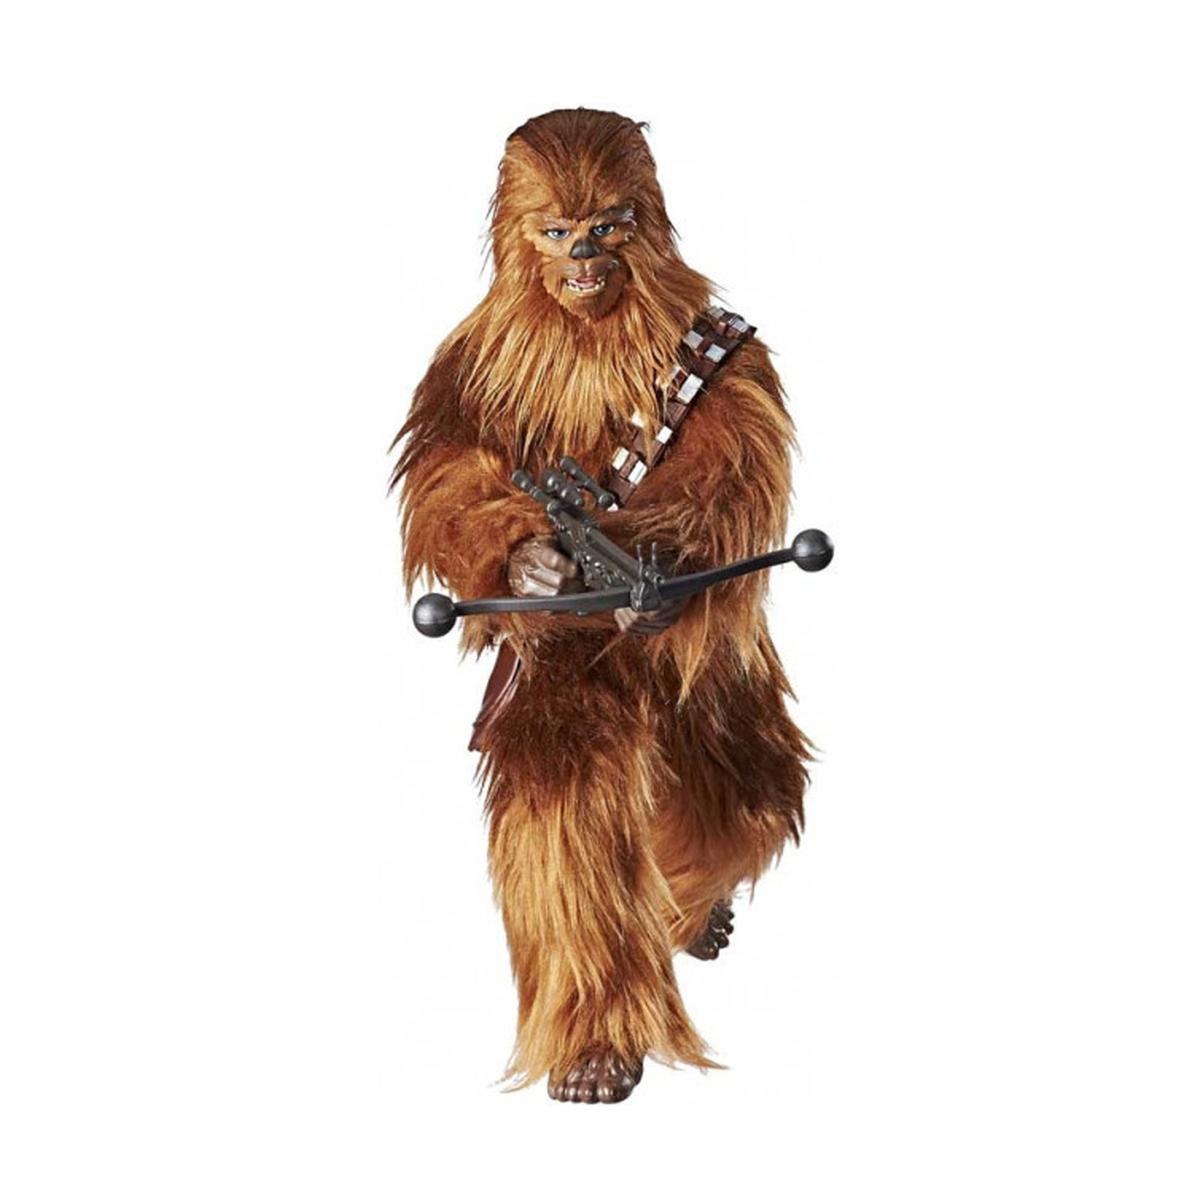 Star Wars - Figura Chewbacca Deluxe | Star Wars | Toys"R"Us España